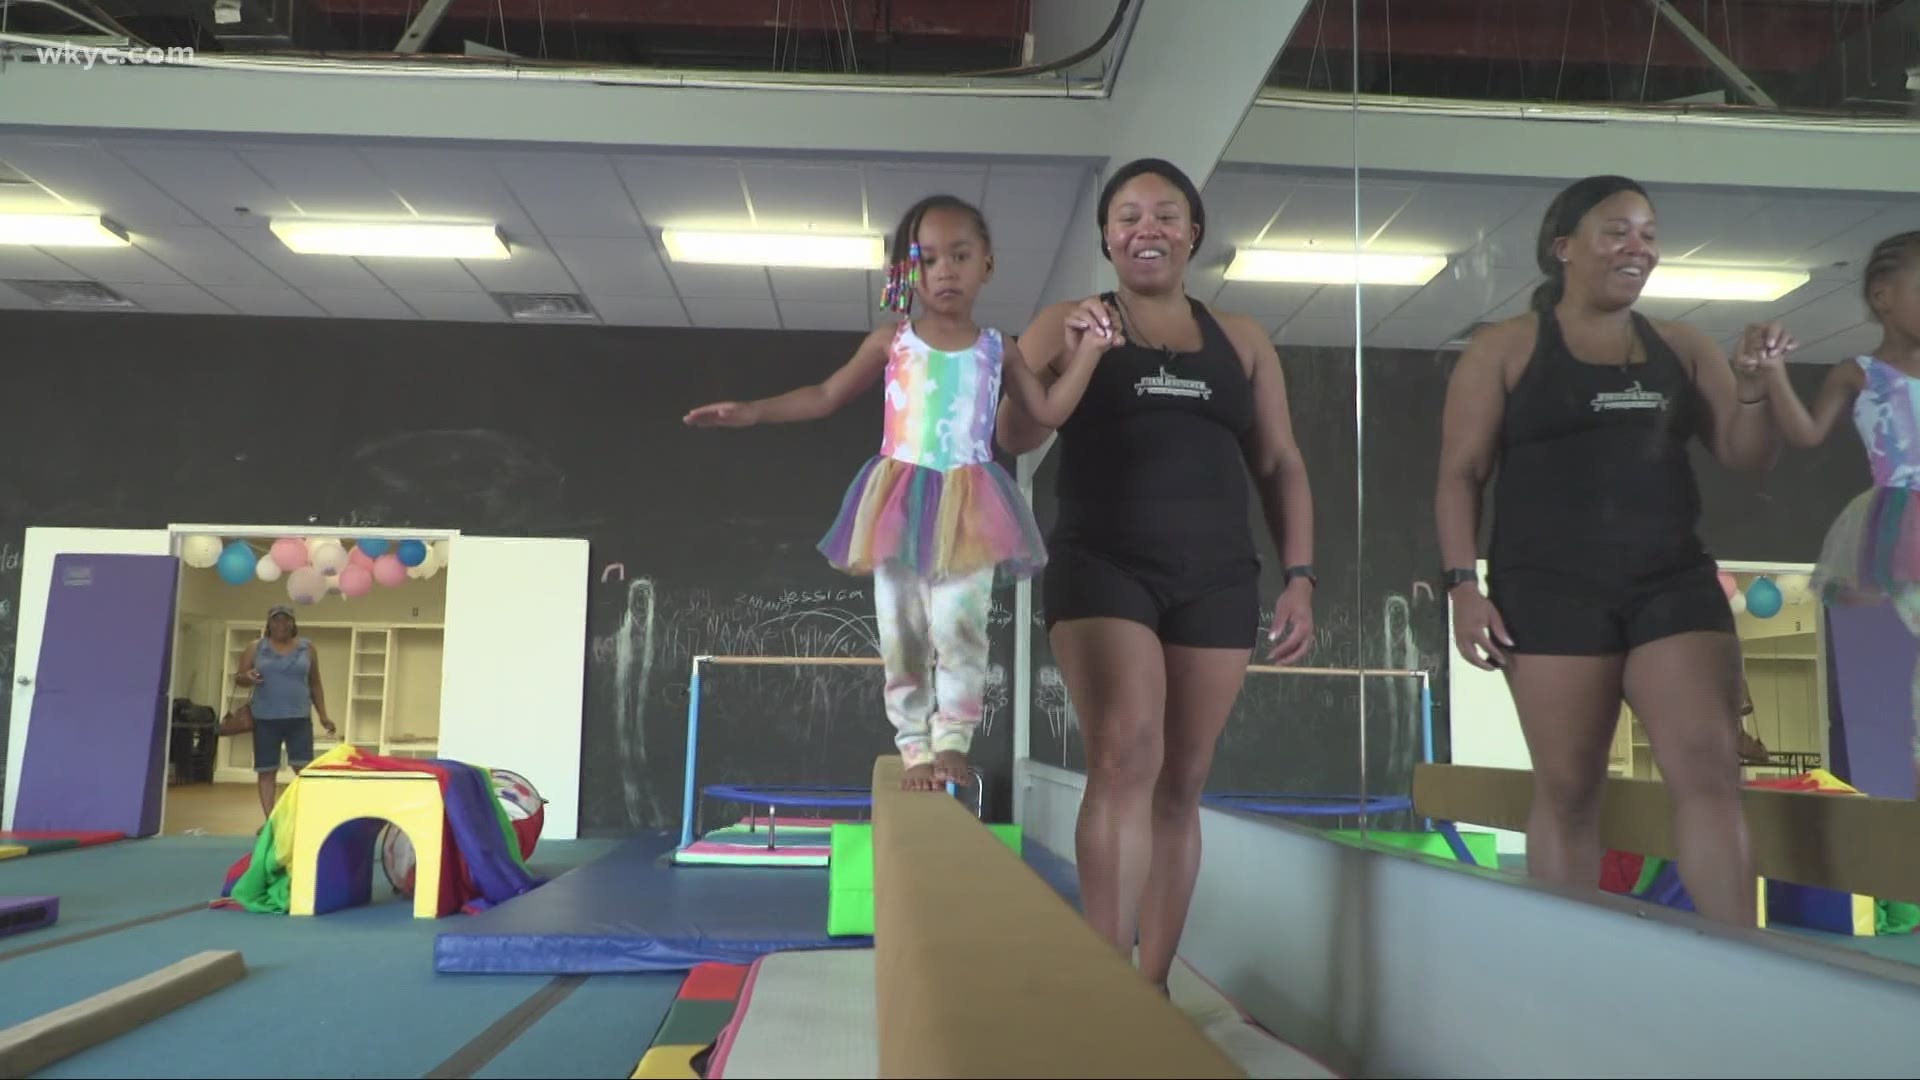 A Northeast Ohio gym owner is helping little girls achieve their goals.